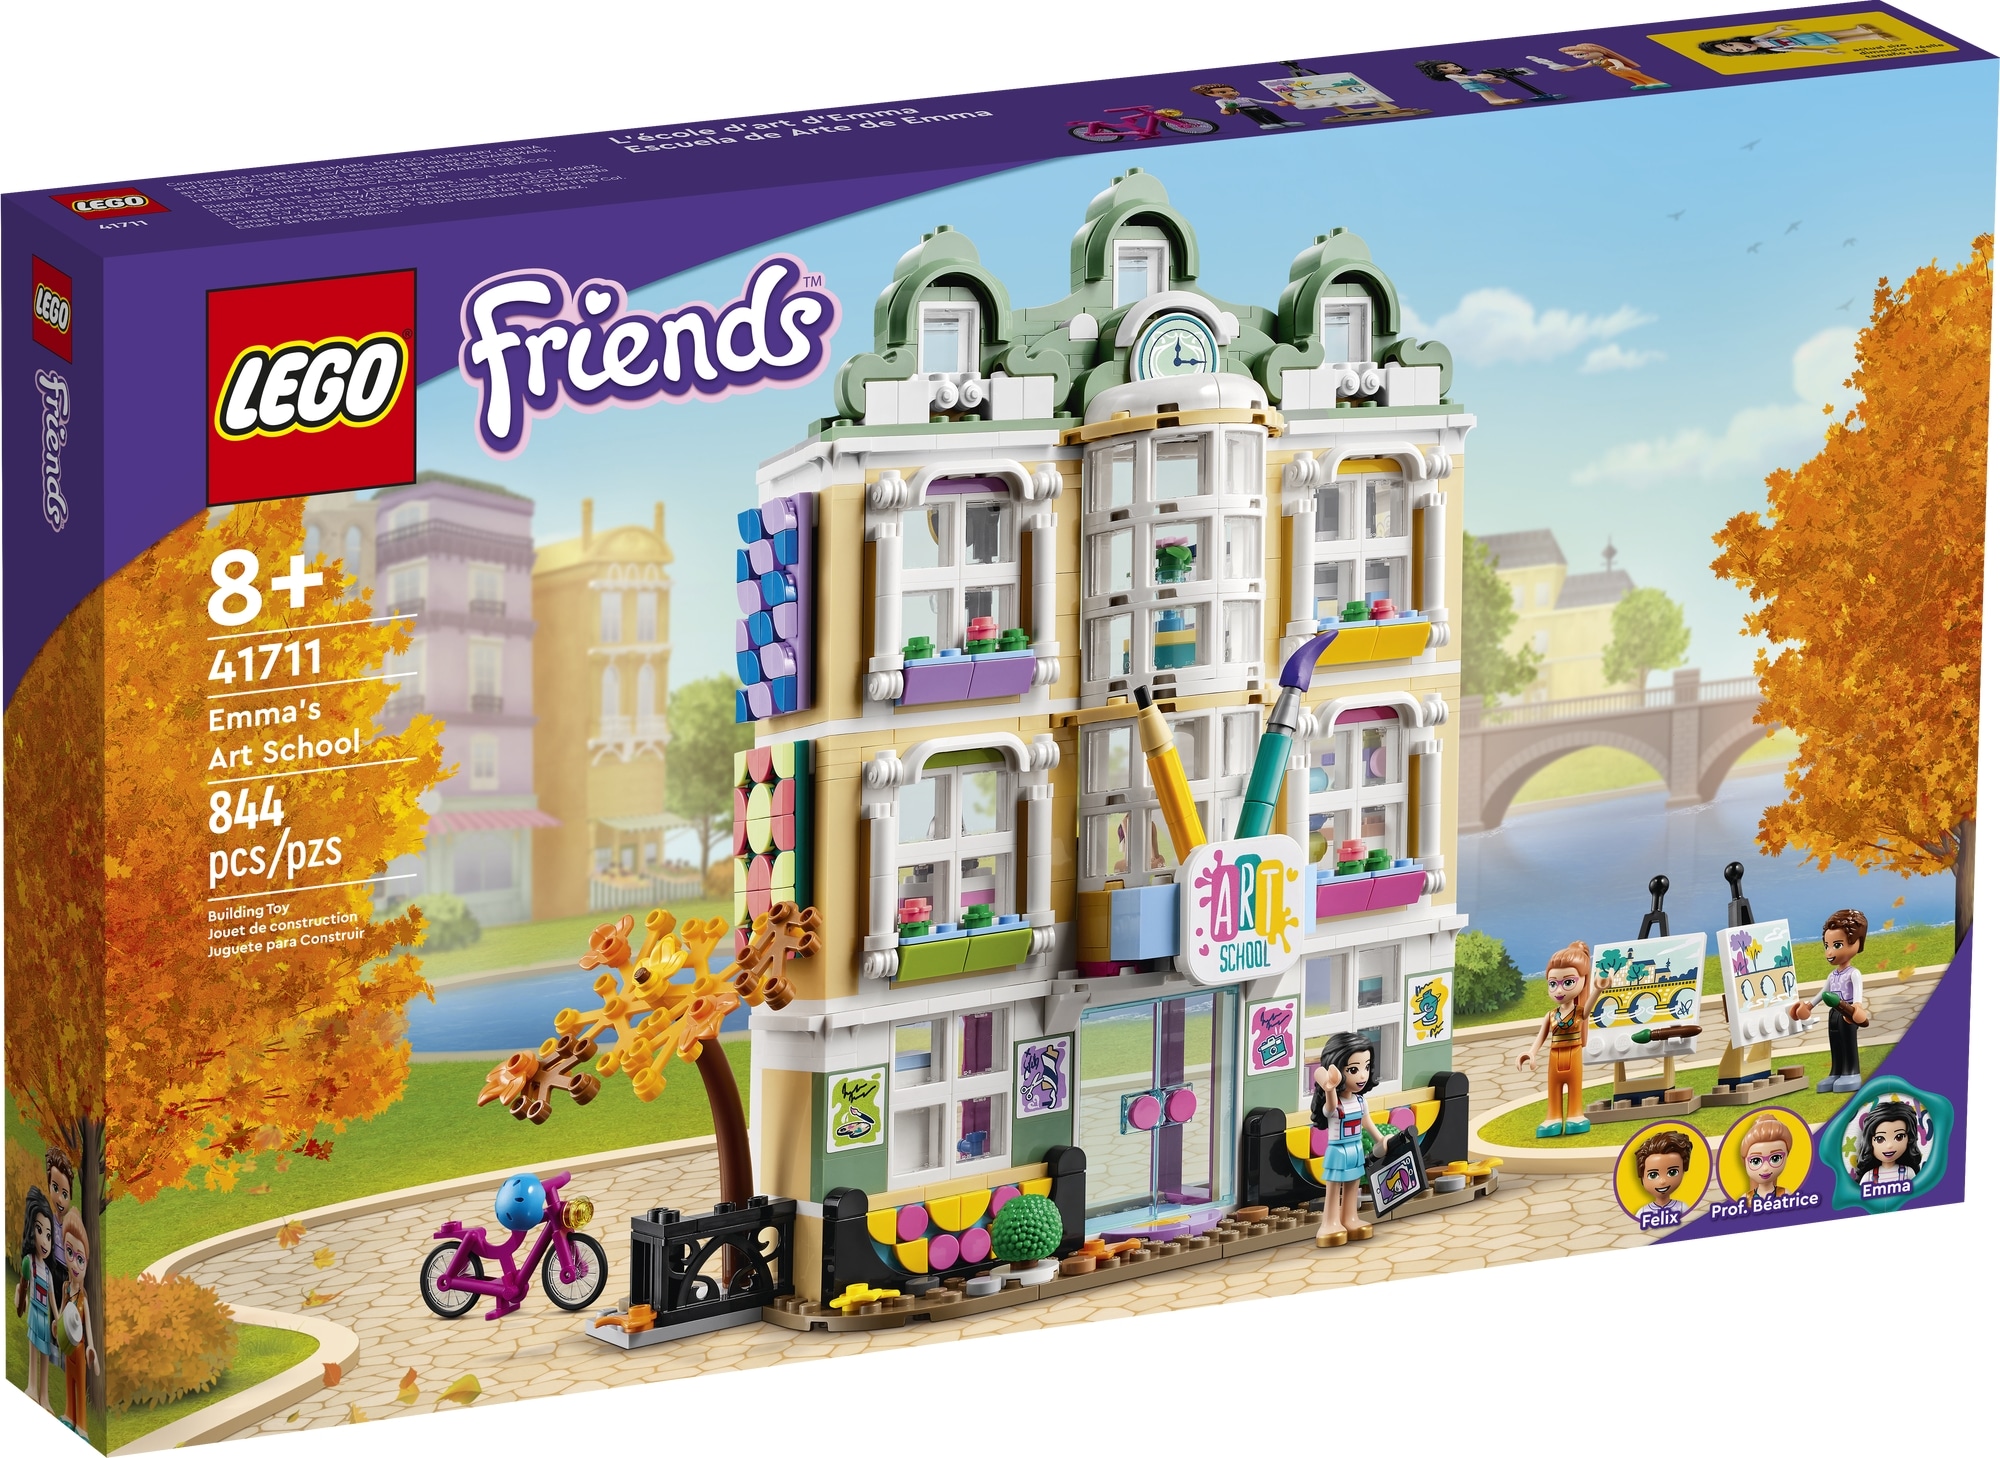 LEGO Friends Summer 2022 Official Set Images The Brick Fan